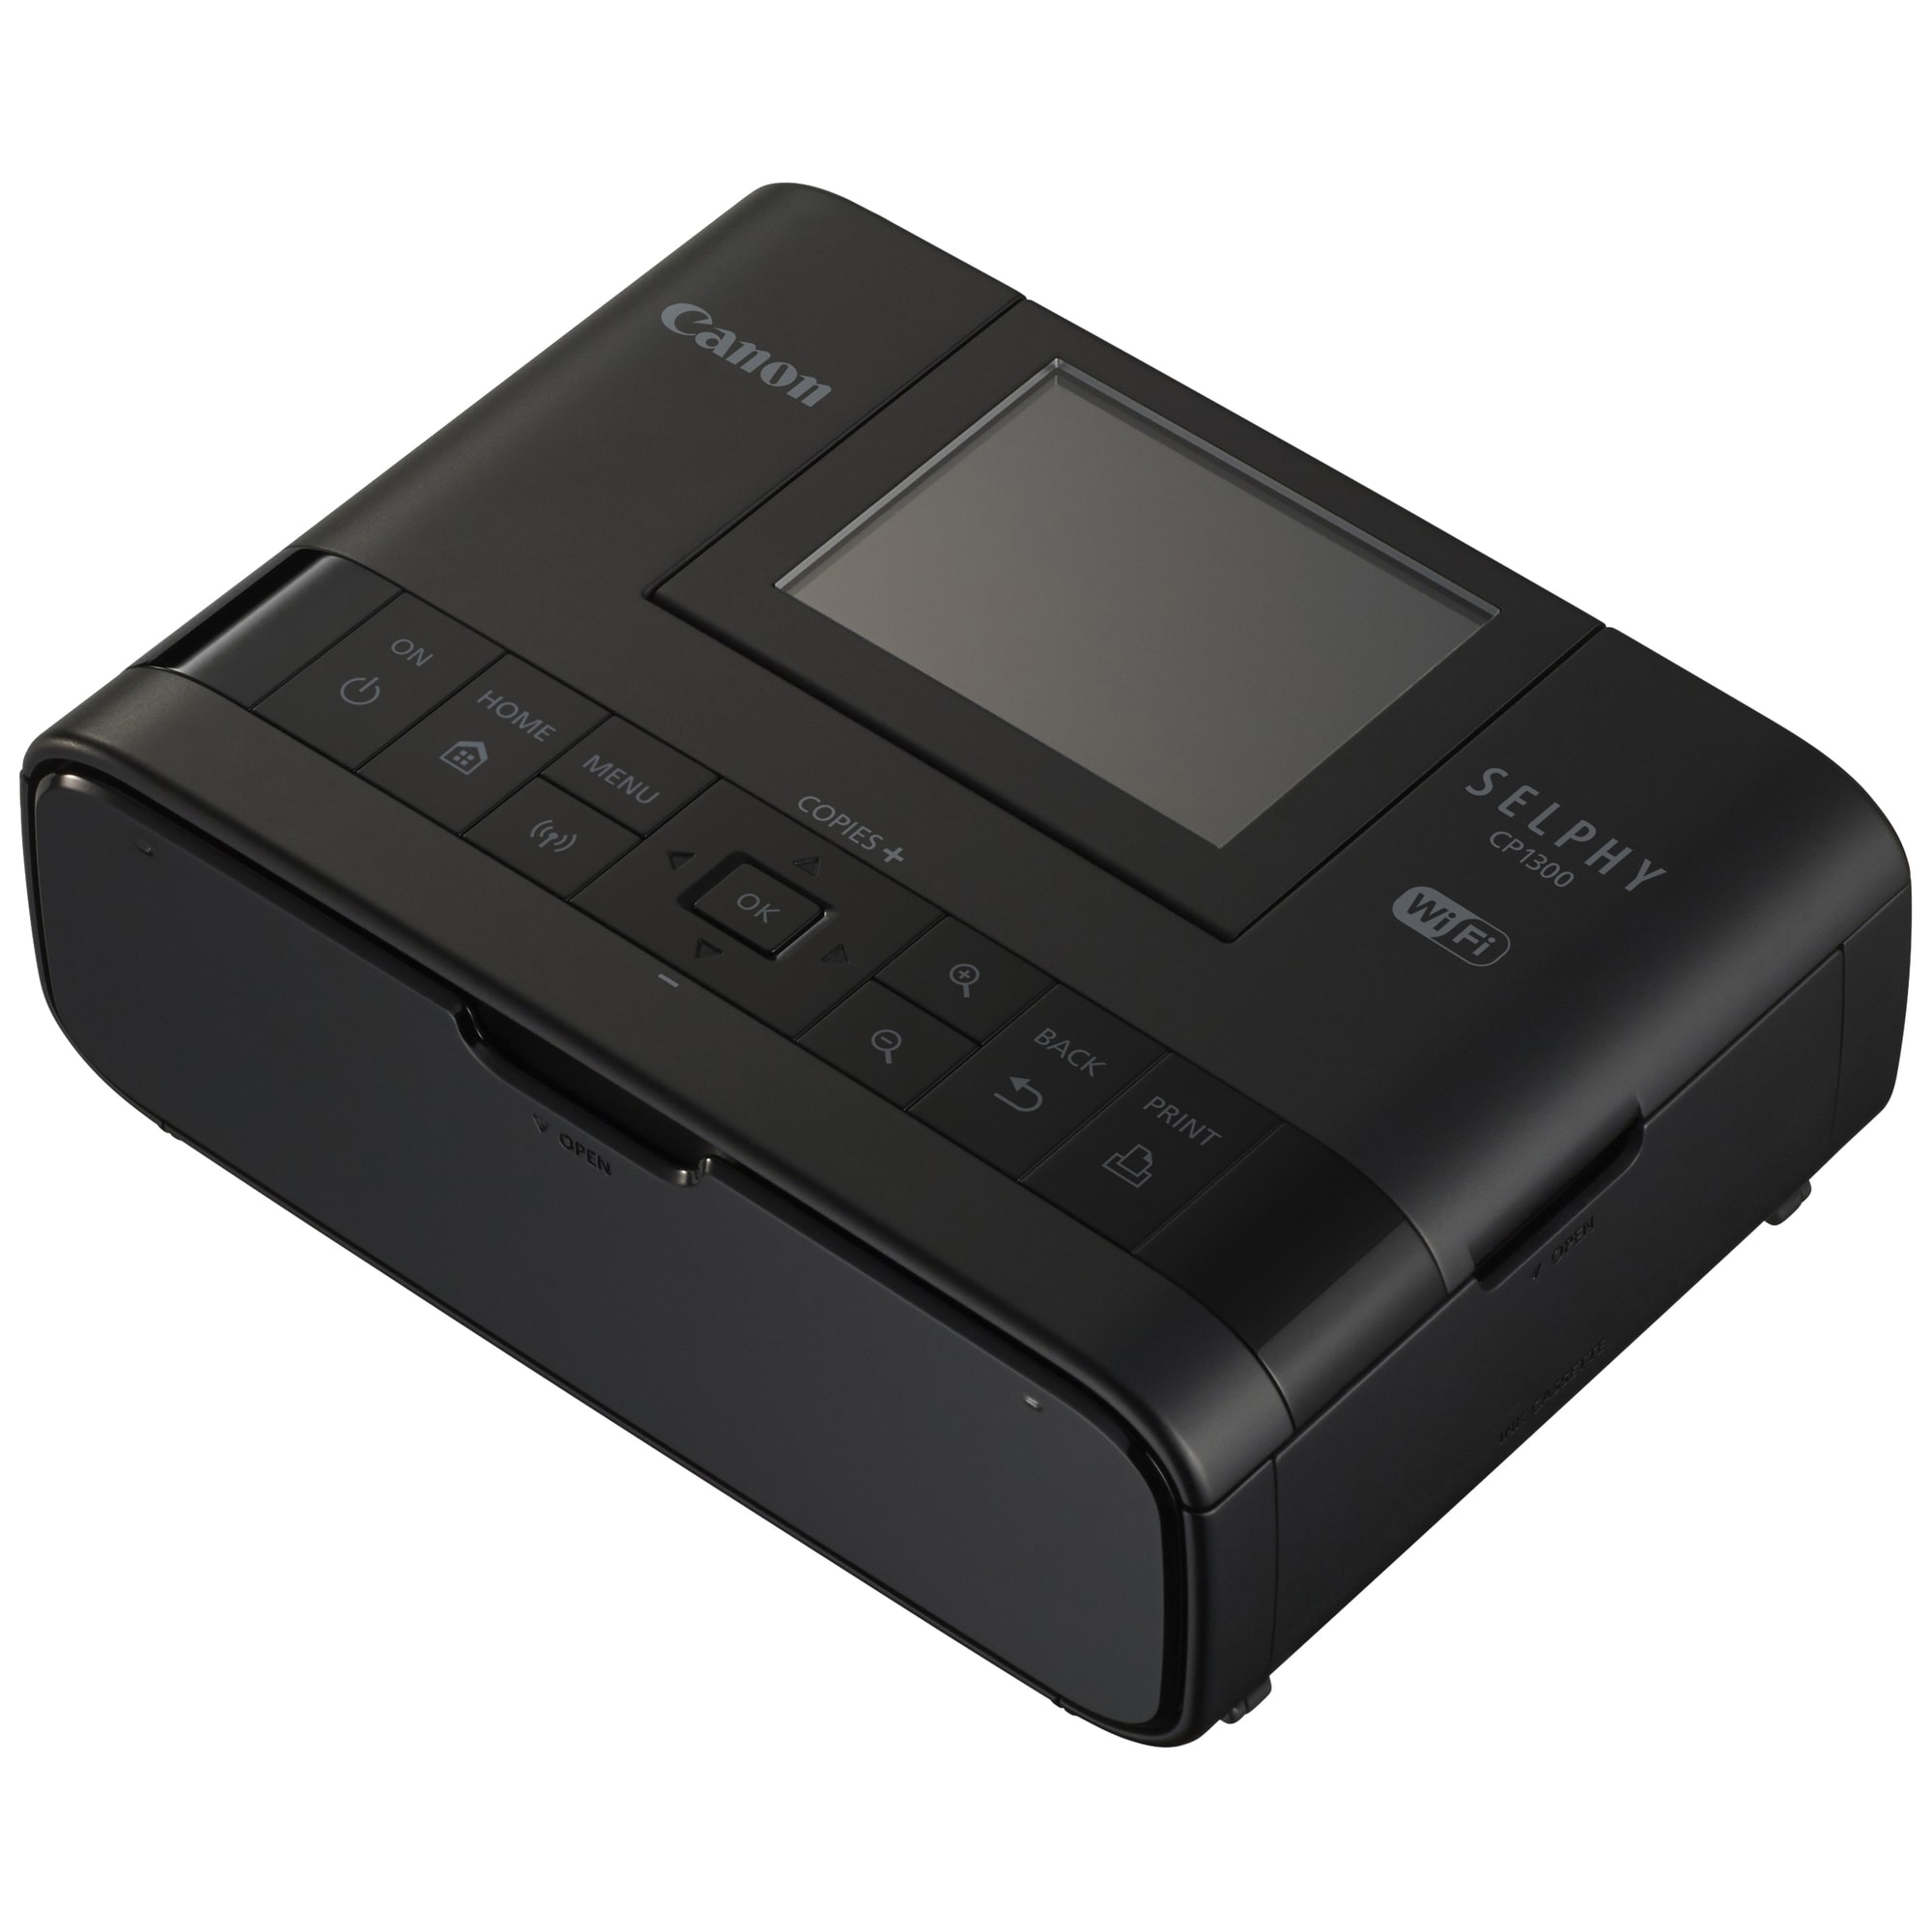 Canon Selphy CP1300 WiFi fotoprinter (sort) | Elgiganten